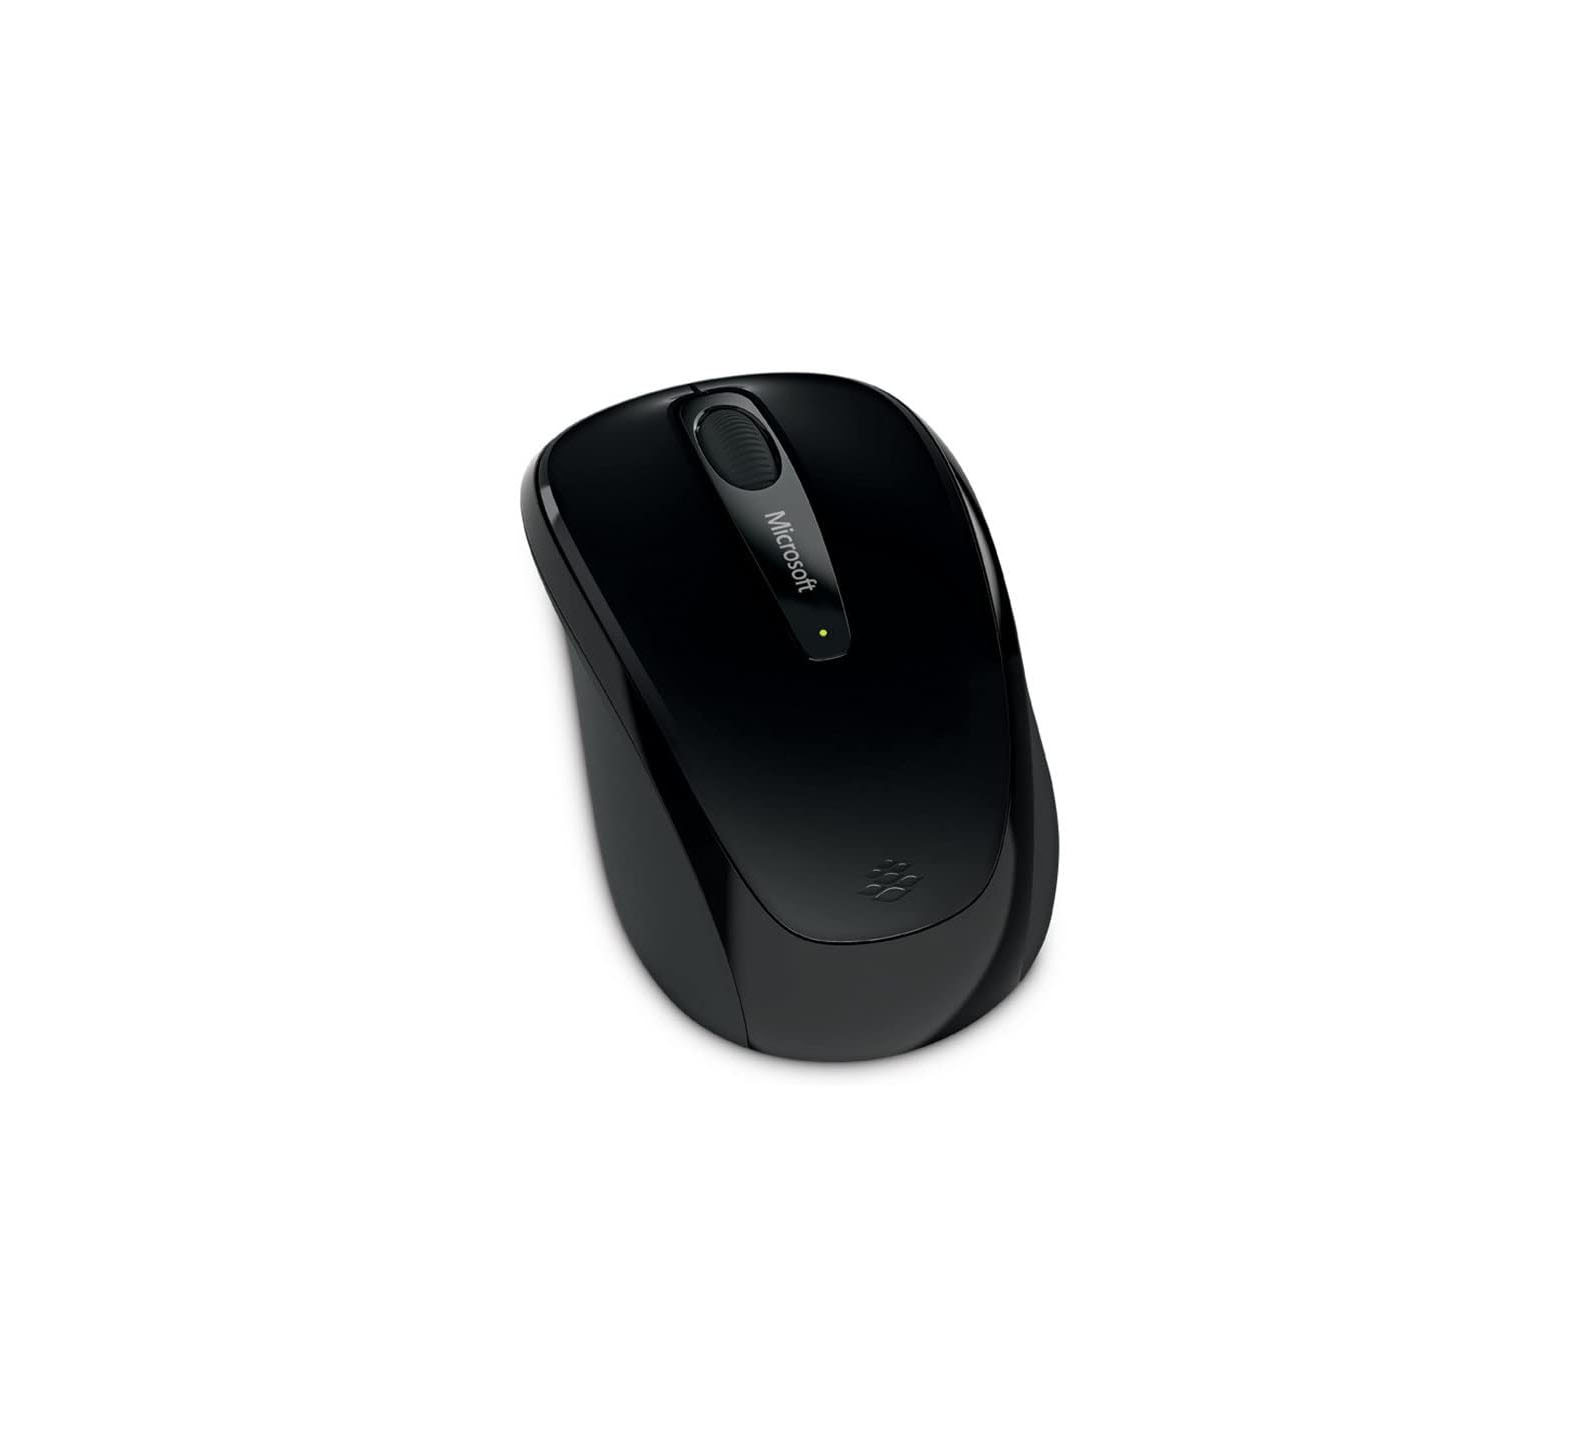 microsoft wireless mouse 3500 power indicator